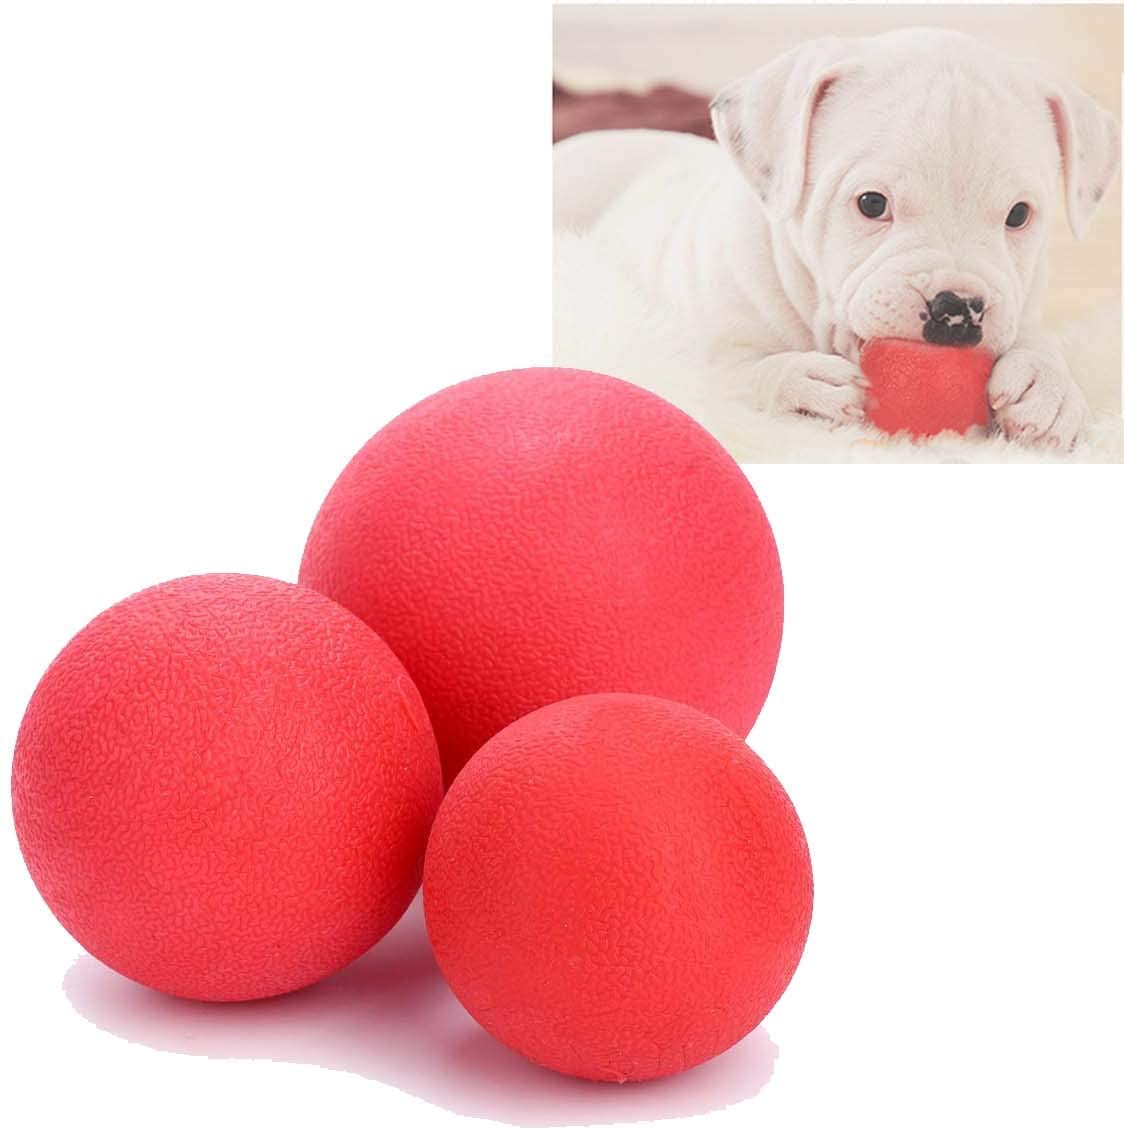  Pelota de juguete pelota de entrenamiento de mascotas caucho sólido bola elástica mordedura de perro resistente sólido juguete interactivo pelota que bota de goma para perros un grupo de tres 